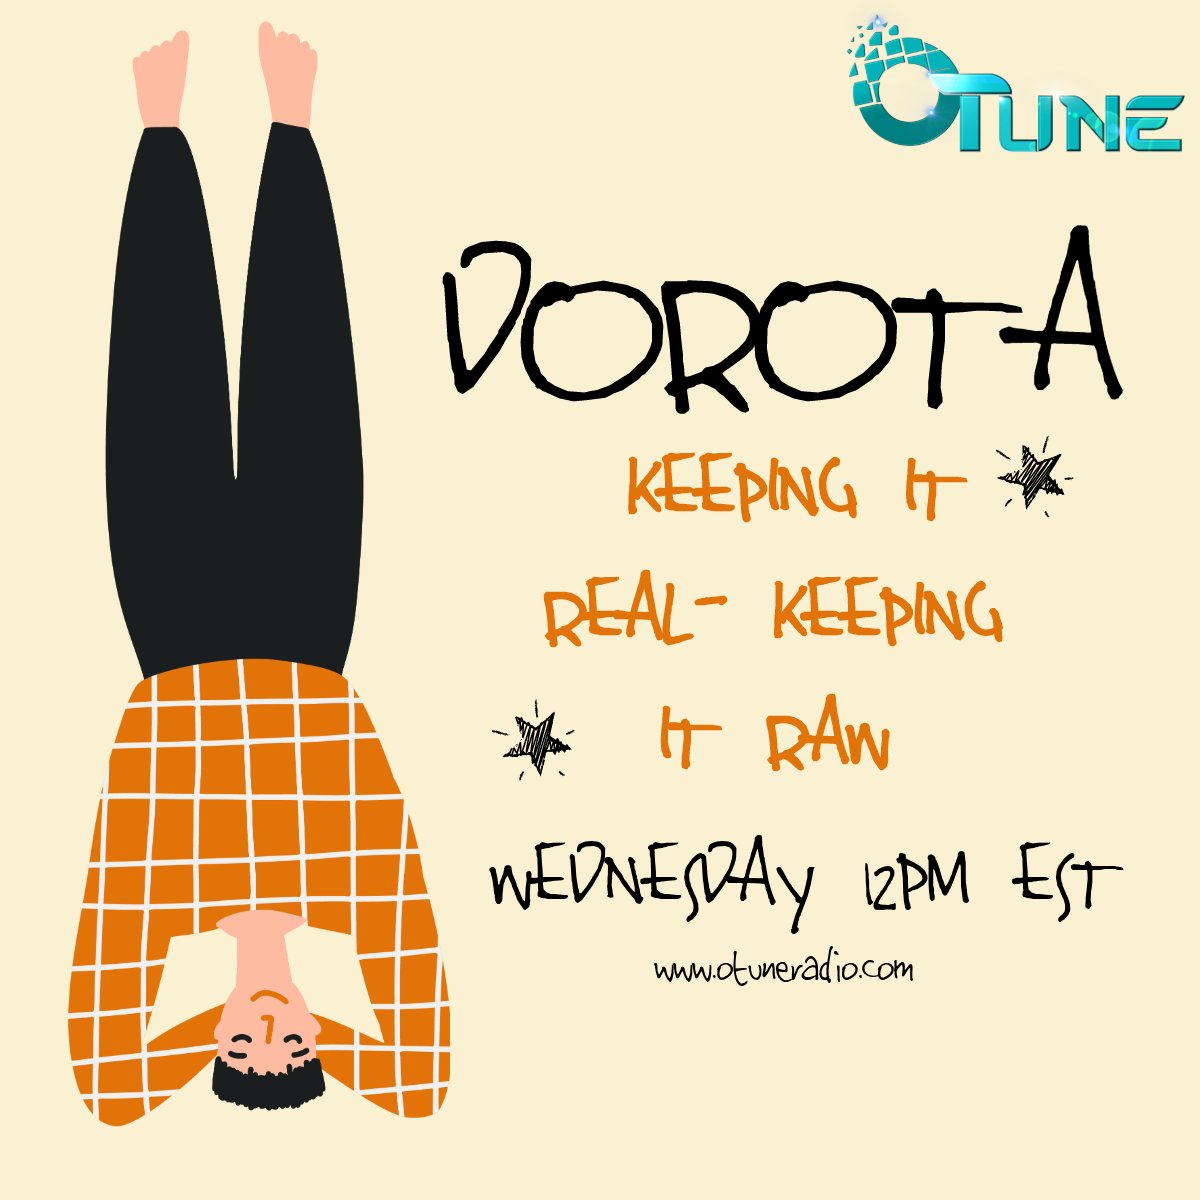 Keep It Raw Keep IT Real with Dorota
Wednesdays 12 PM EST
otuneradio.com

#talkshow #realstories #reallife #truthbetold #otuneradio
#dorota #radioshow